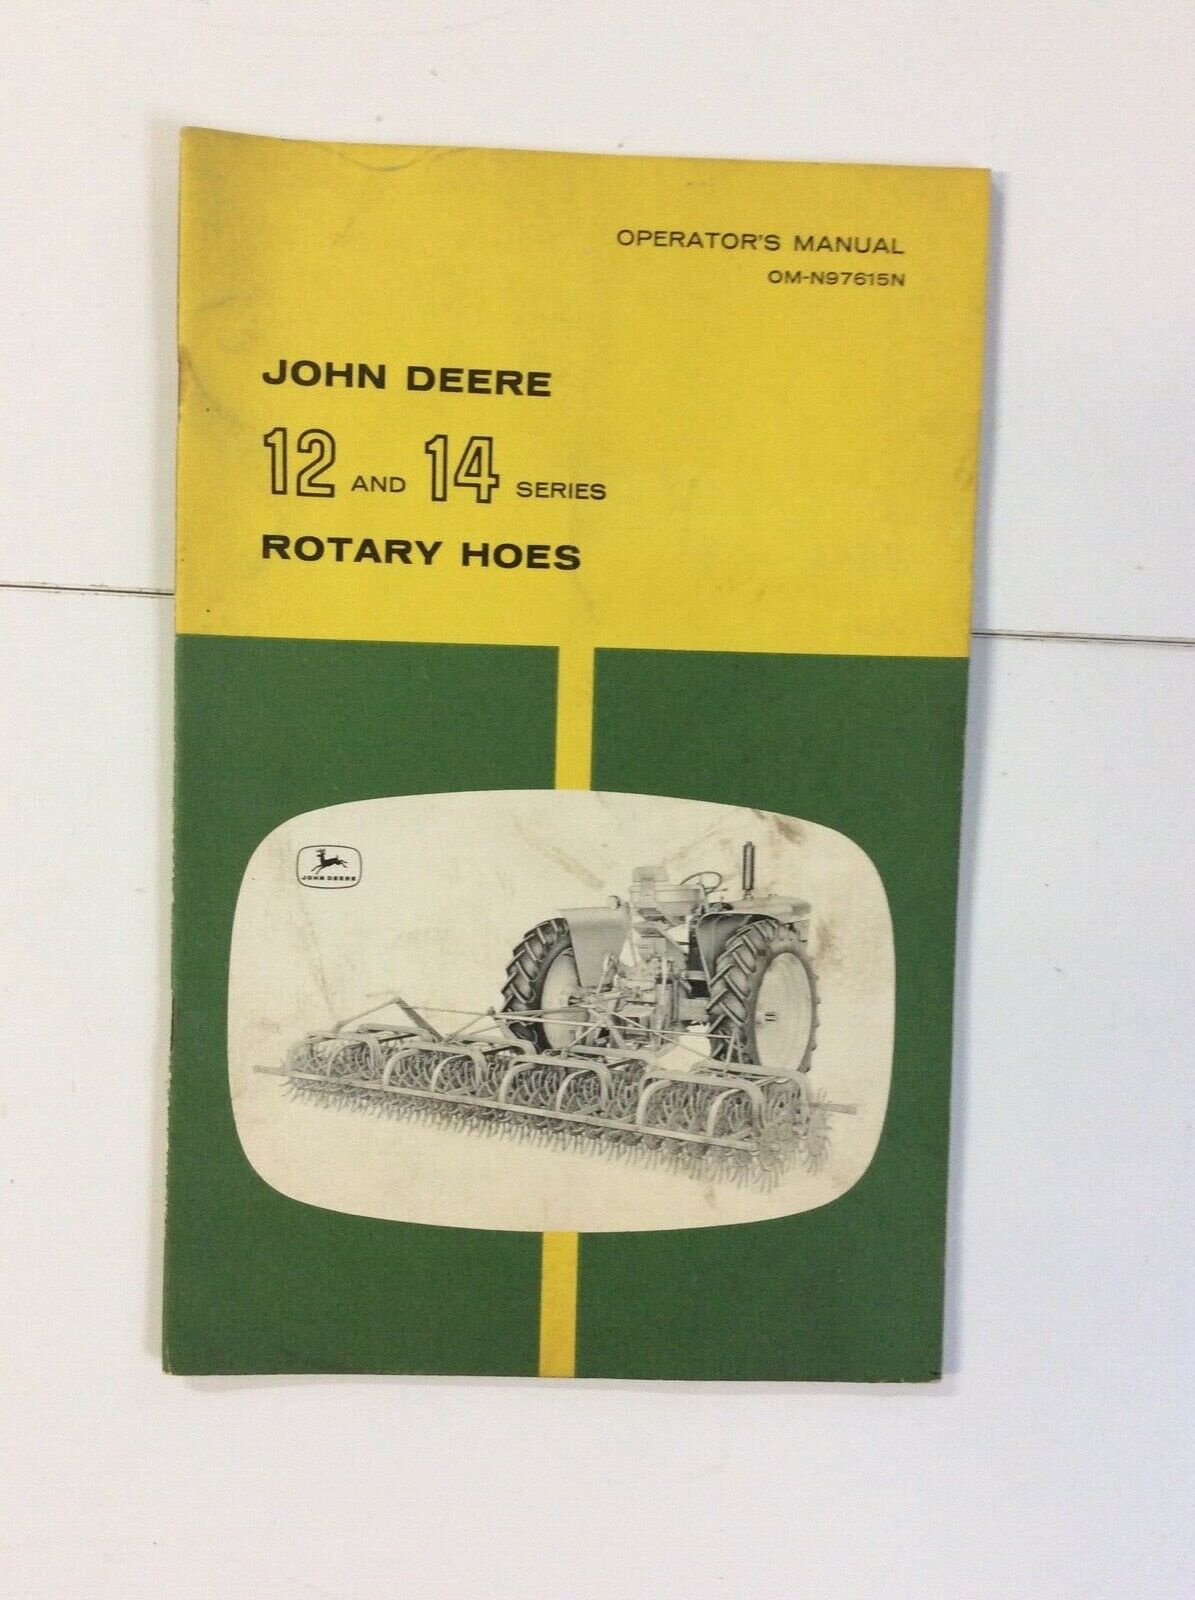 OMN97615N John Deere Operators Manual For 12, 14 Series Rotary Hoes